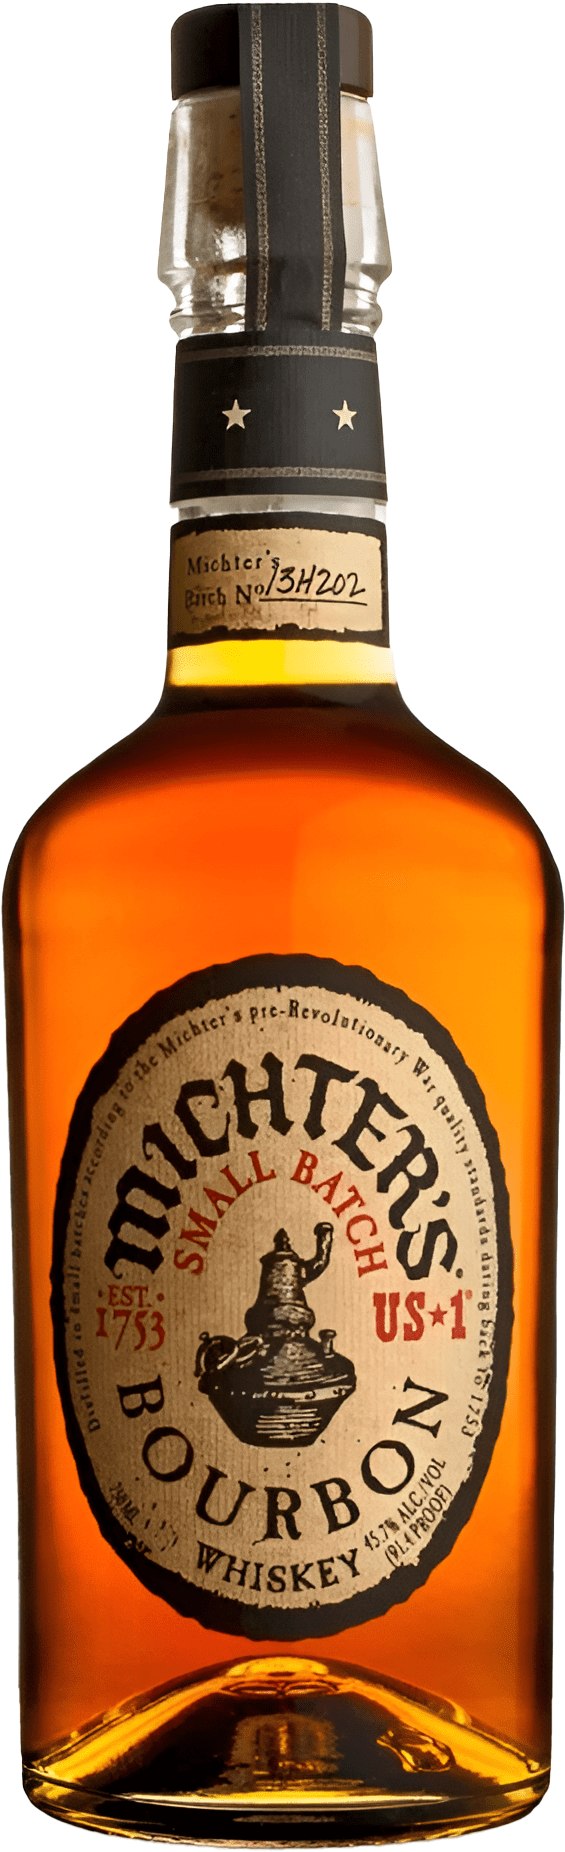 Michter's US*1 Bourbon Whiskey 45,7% 0,7l